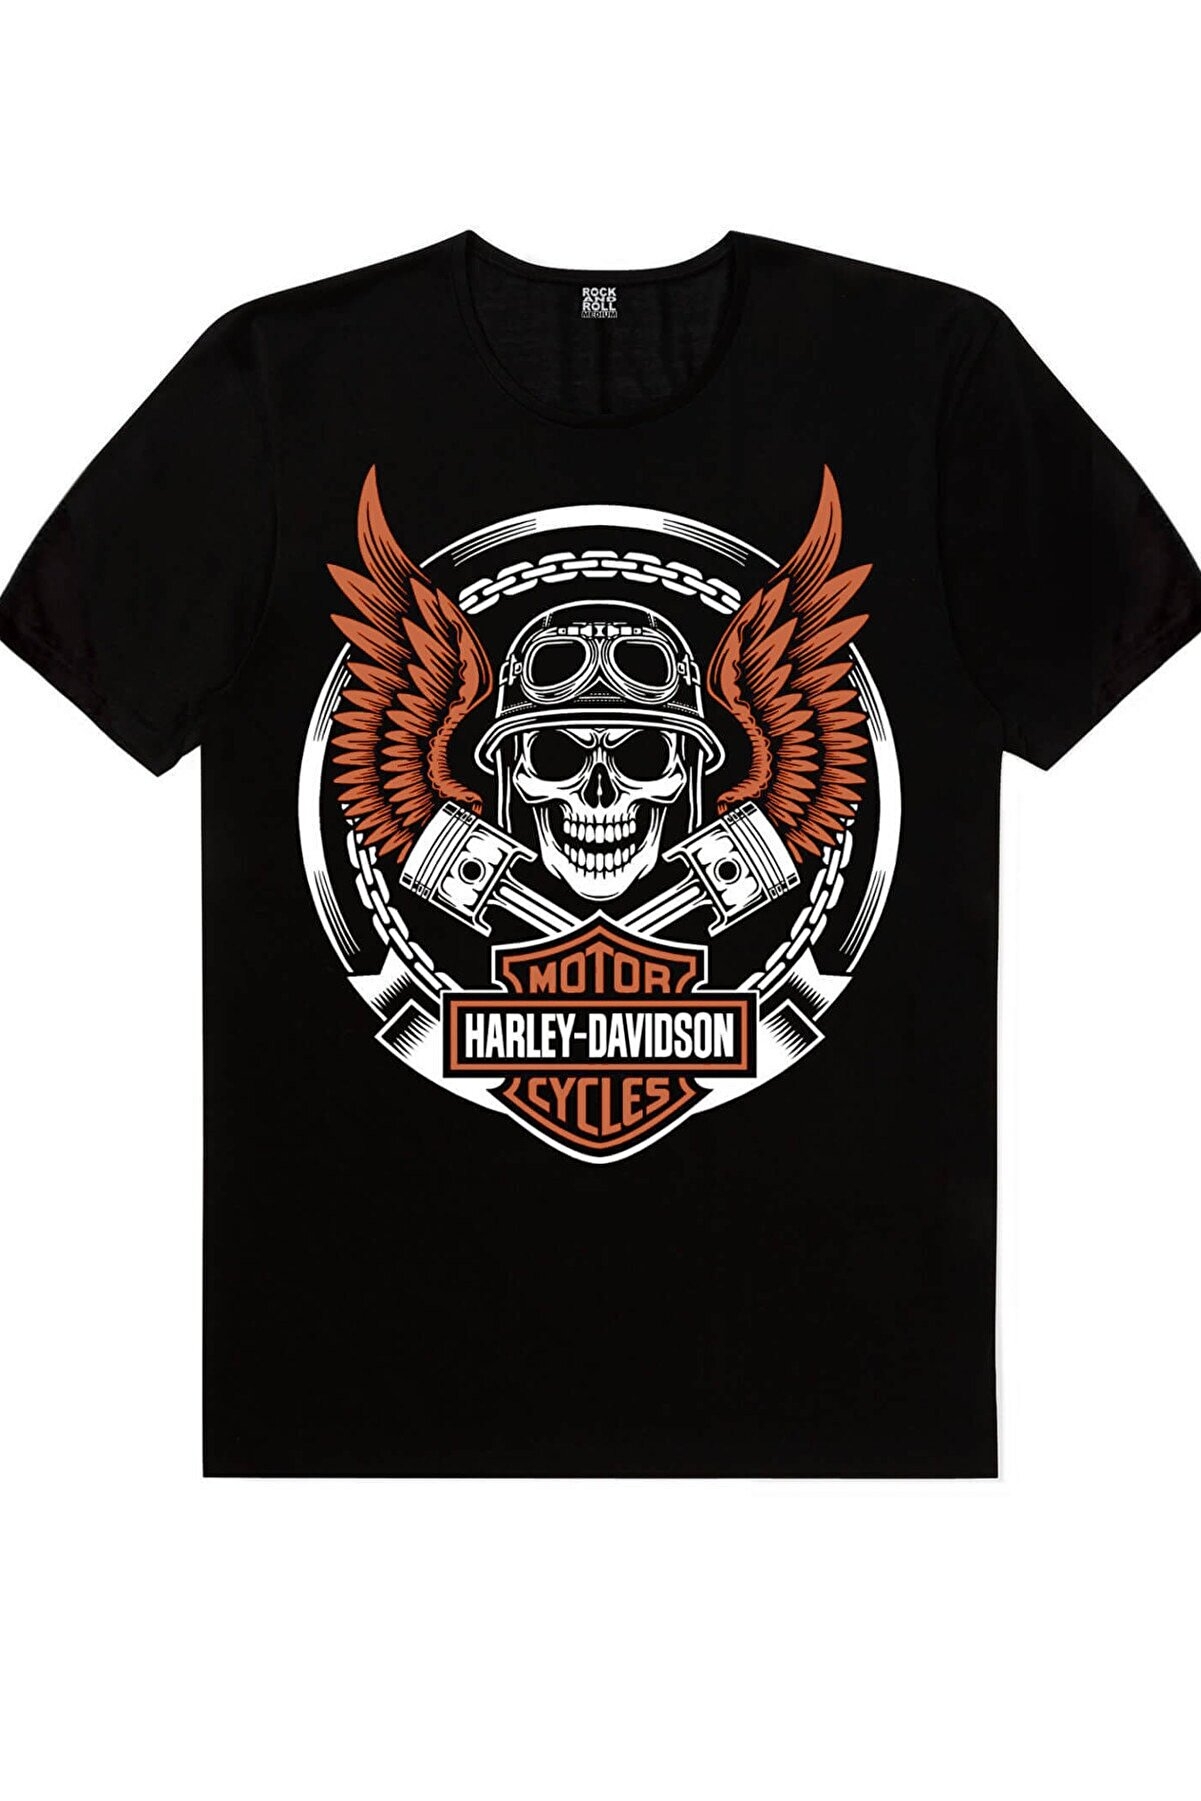 Motorcu Kurukafa, Kızgın Kartal Erkek 2'li Eko Paket T-Shirt